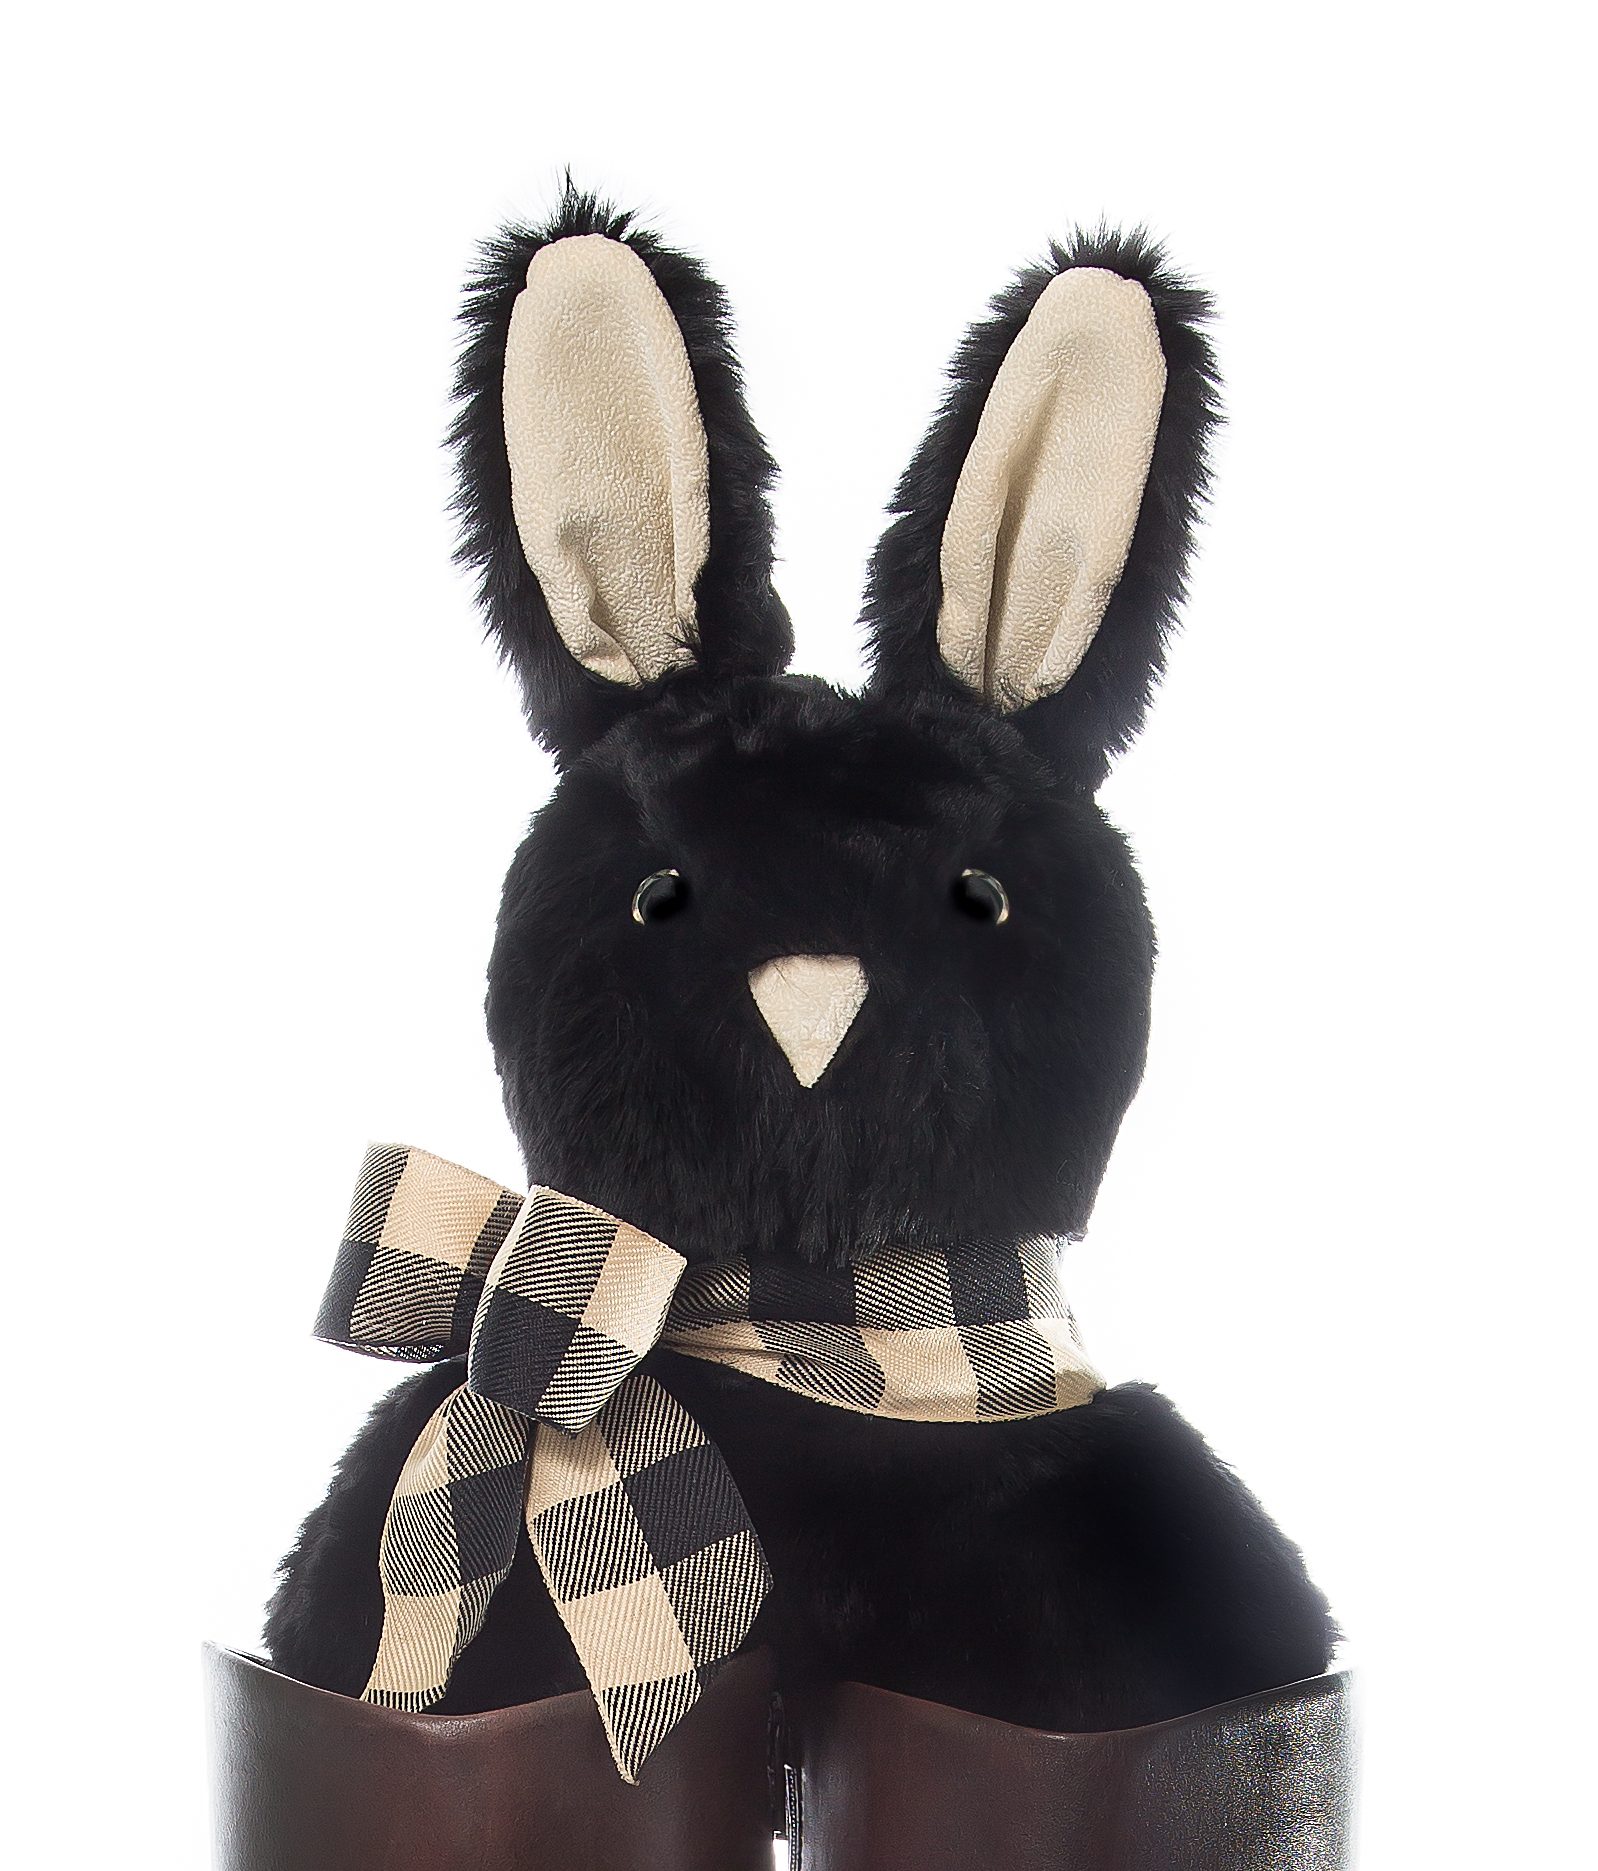 black bunny stuffed animal